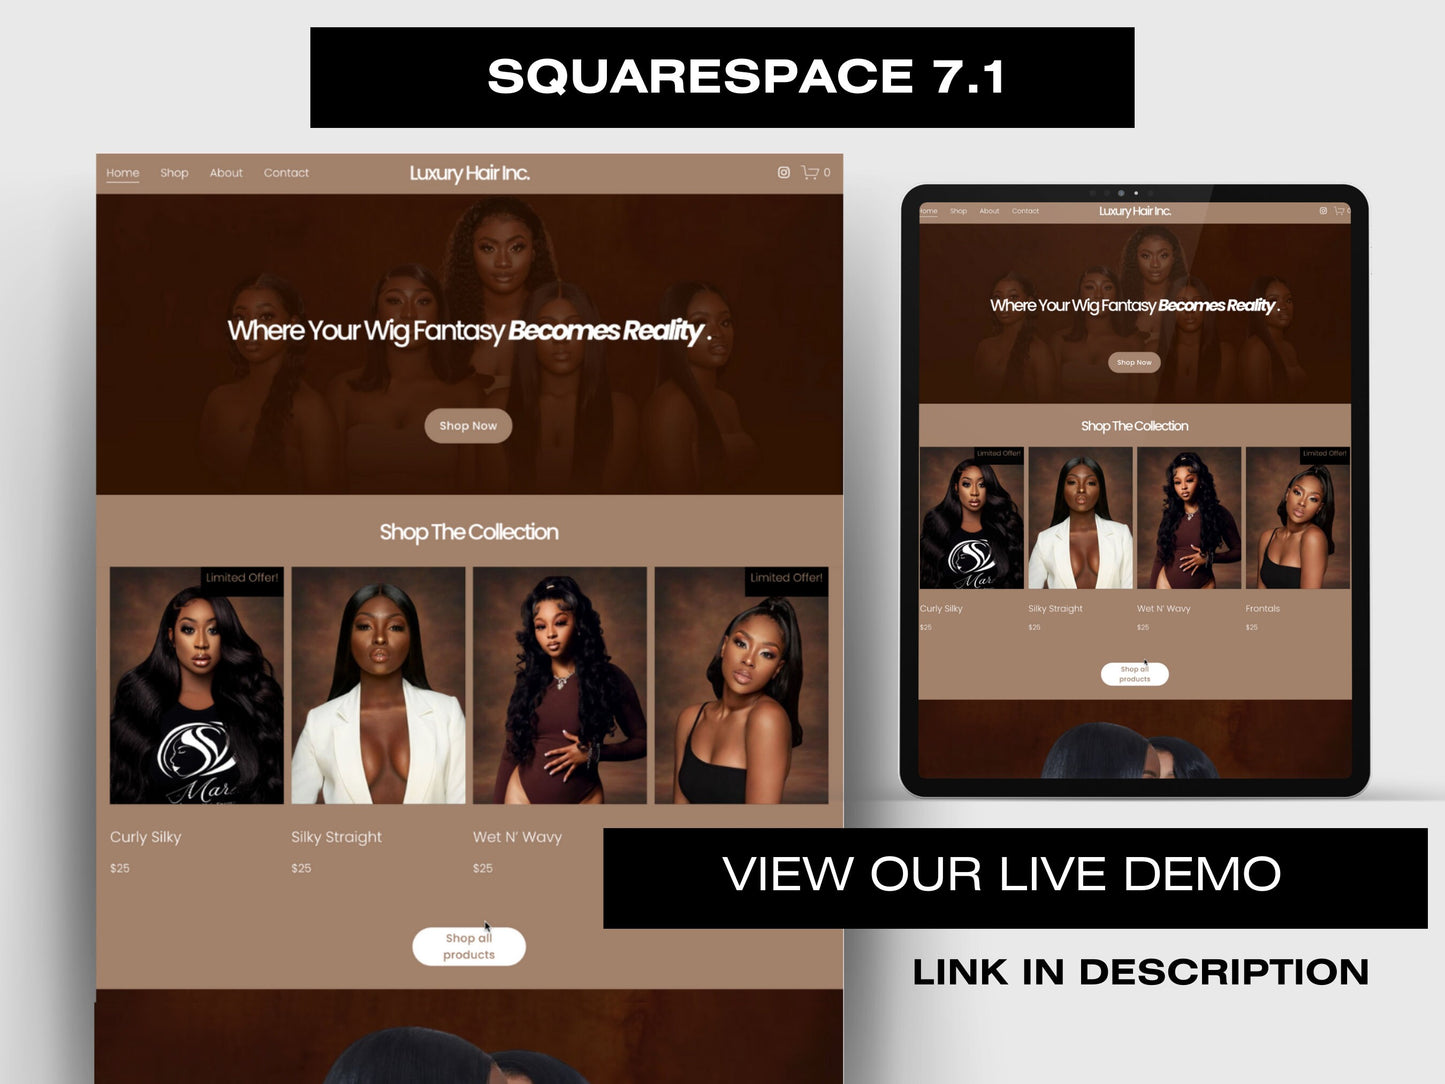 BROWN Melanin Aesthetic Squarespace Website Template, Skin Touched Website Template Squarespace,D.I.Y Website Design,Squarespace Template